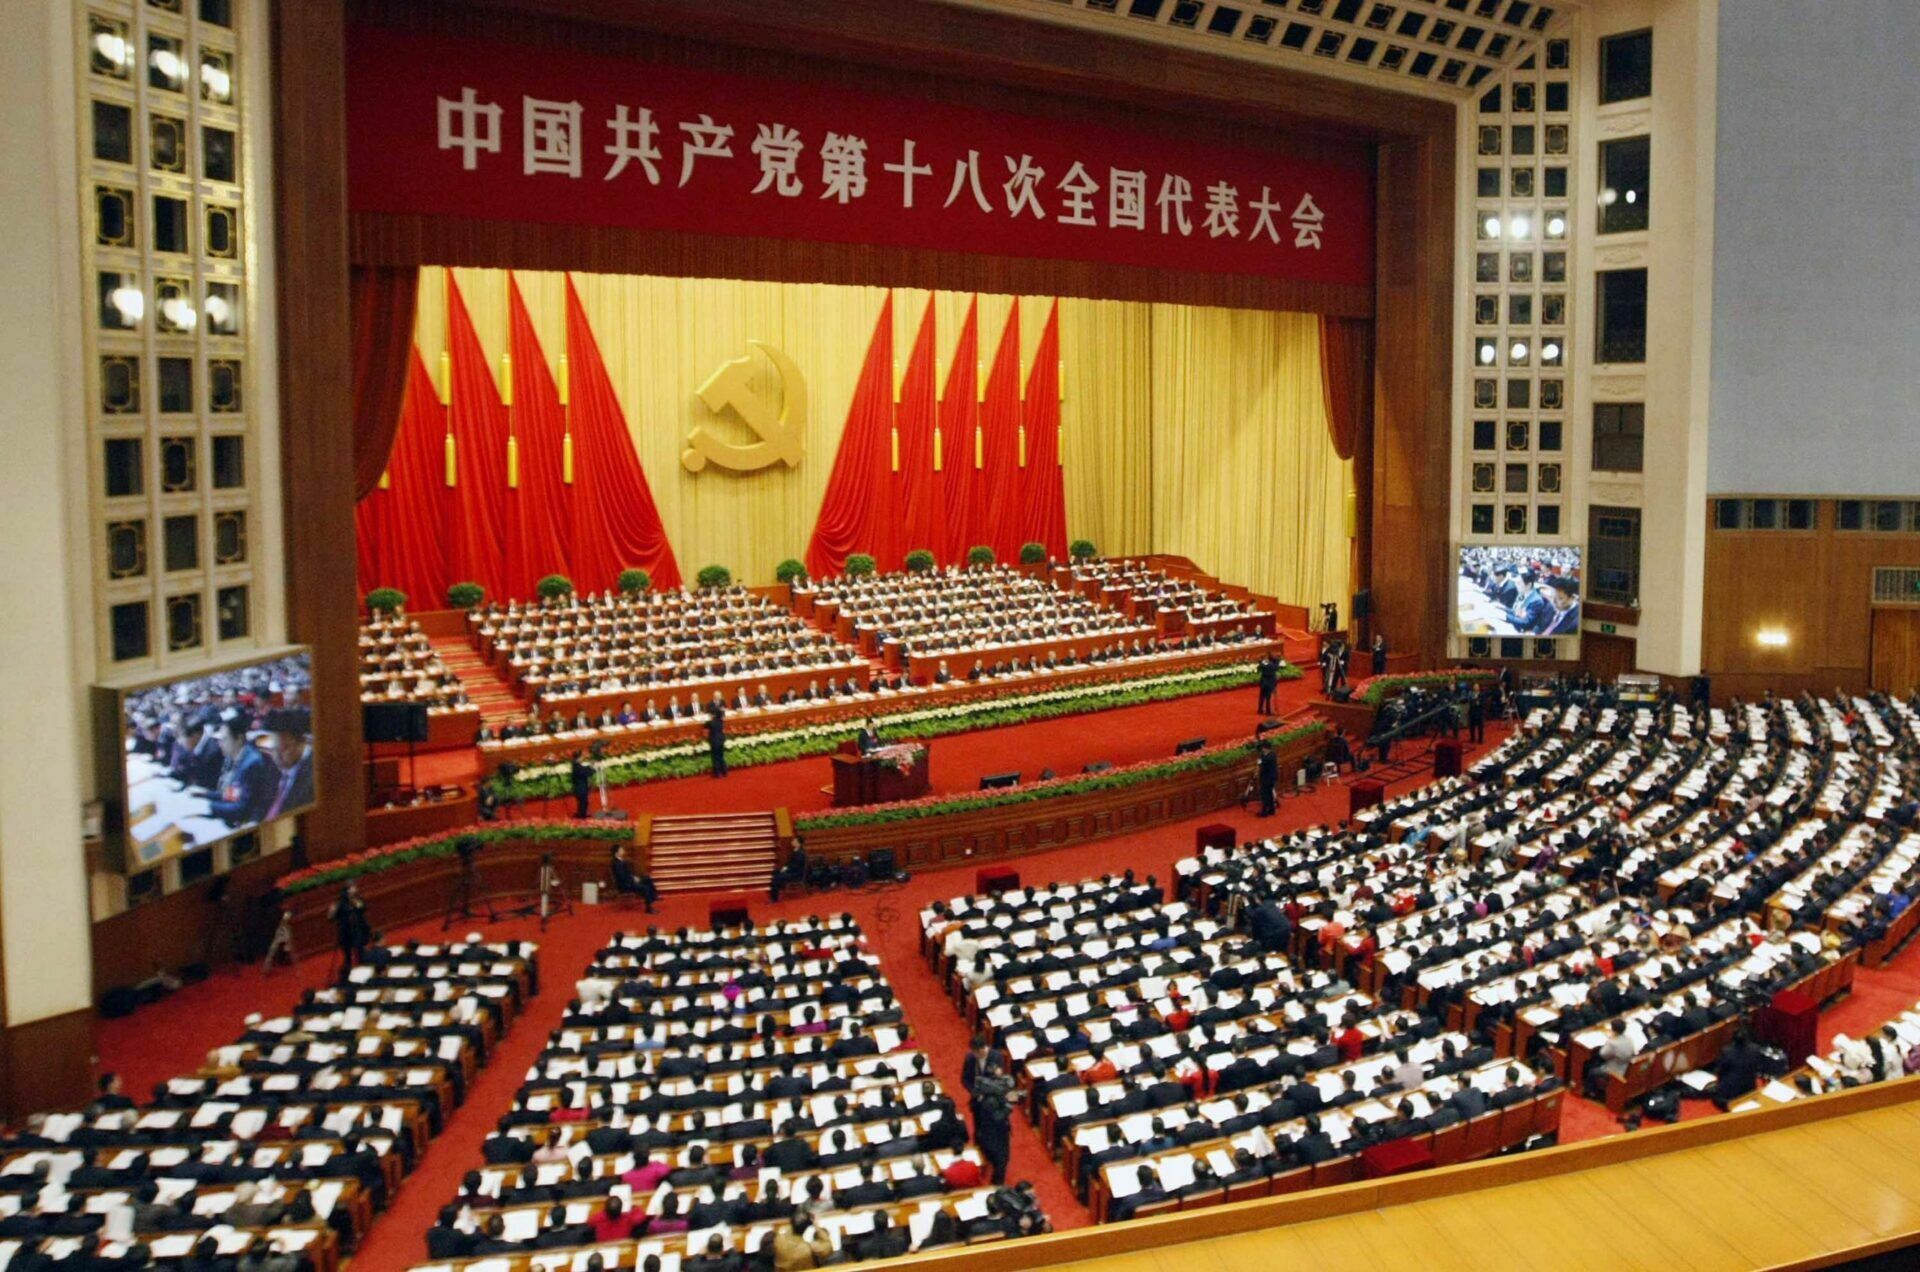 В Пекине открылся XX съезд Компартии Китая, на котором выступил Си Цзиньпин